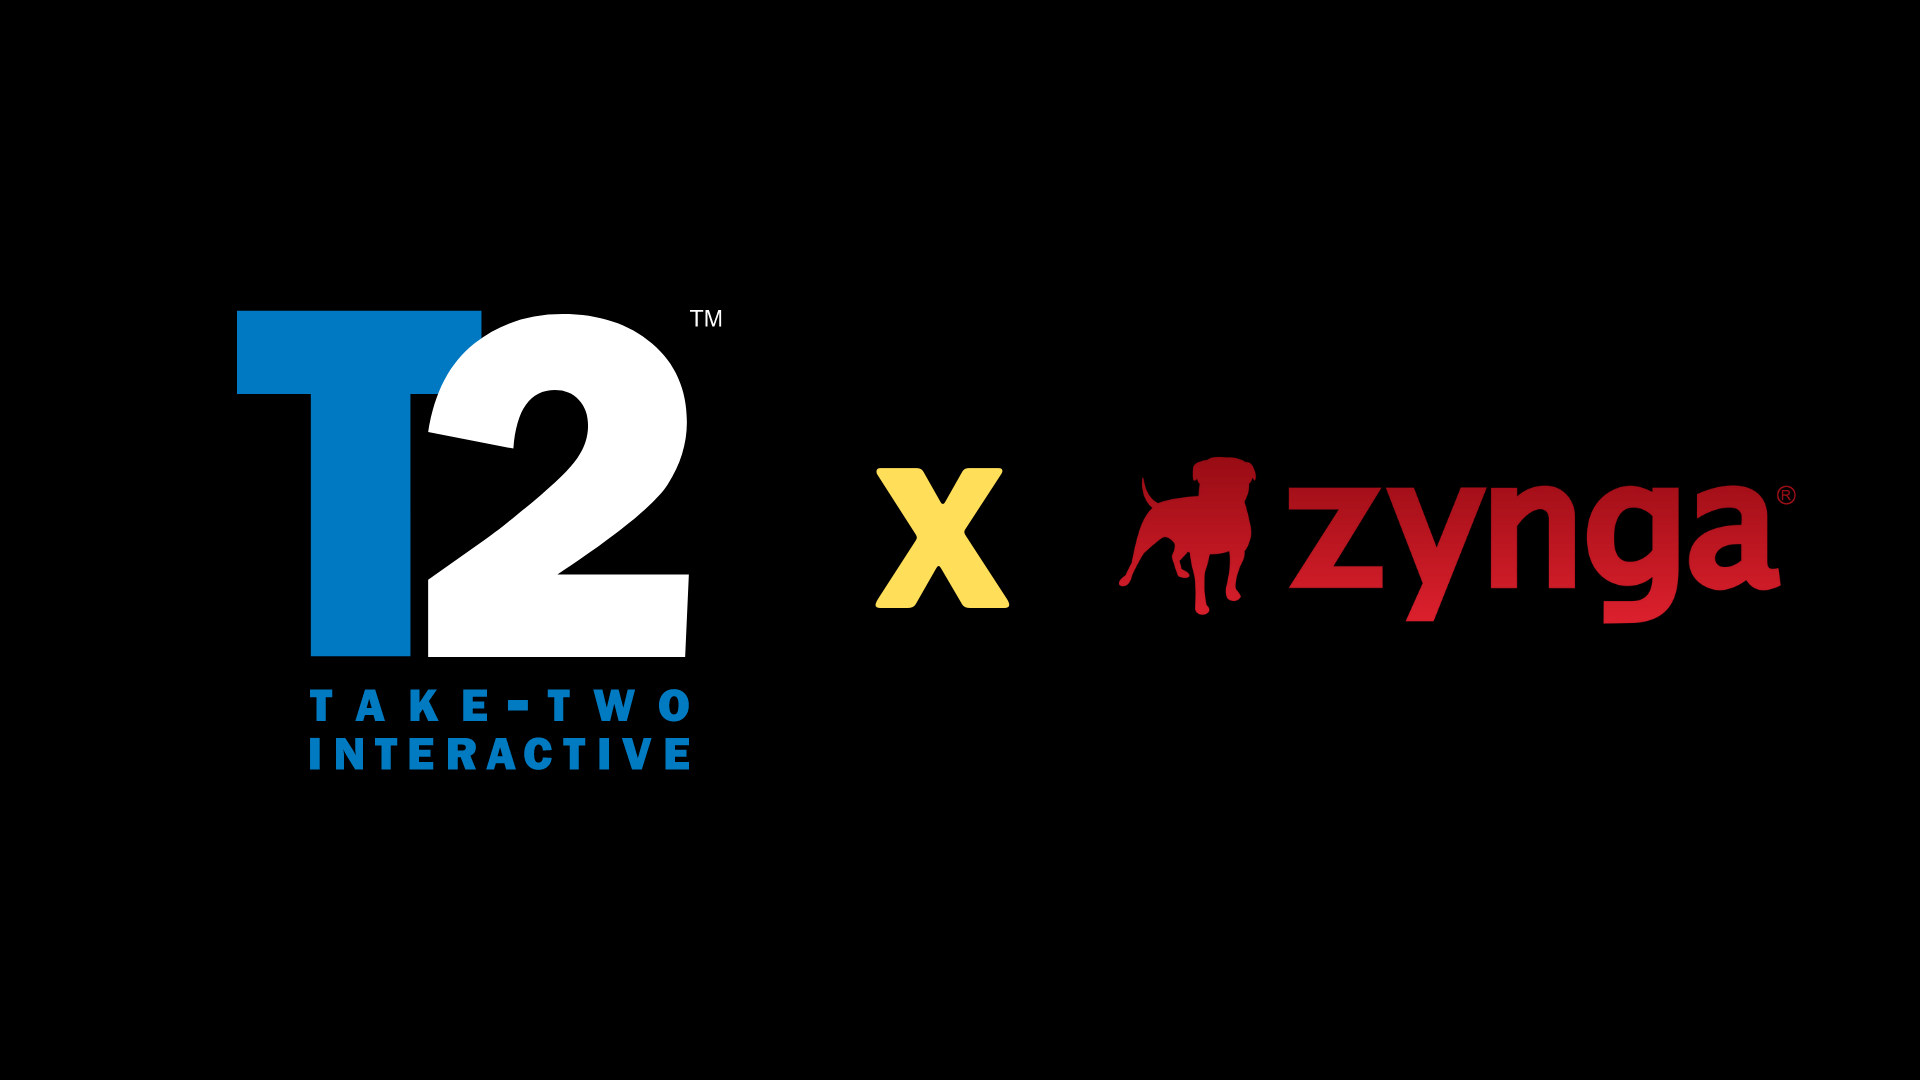 Take-Two X Zynga